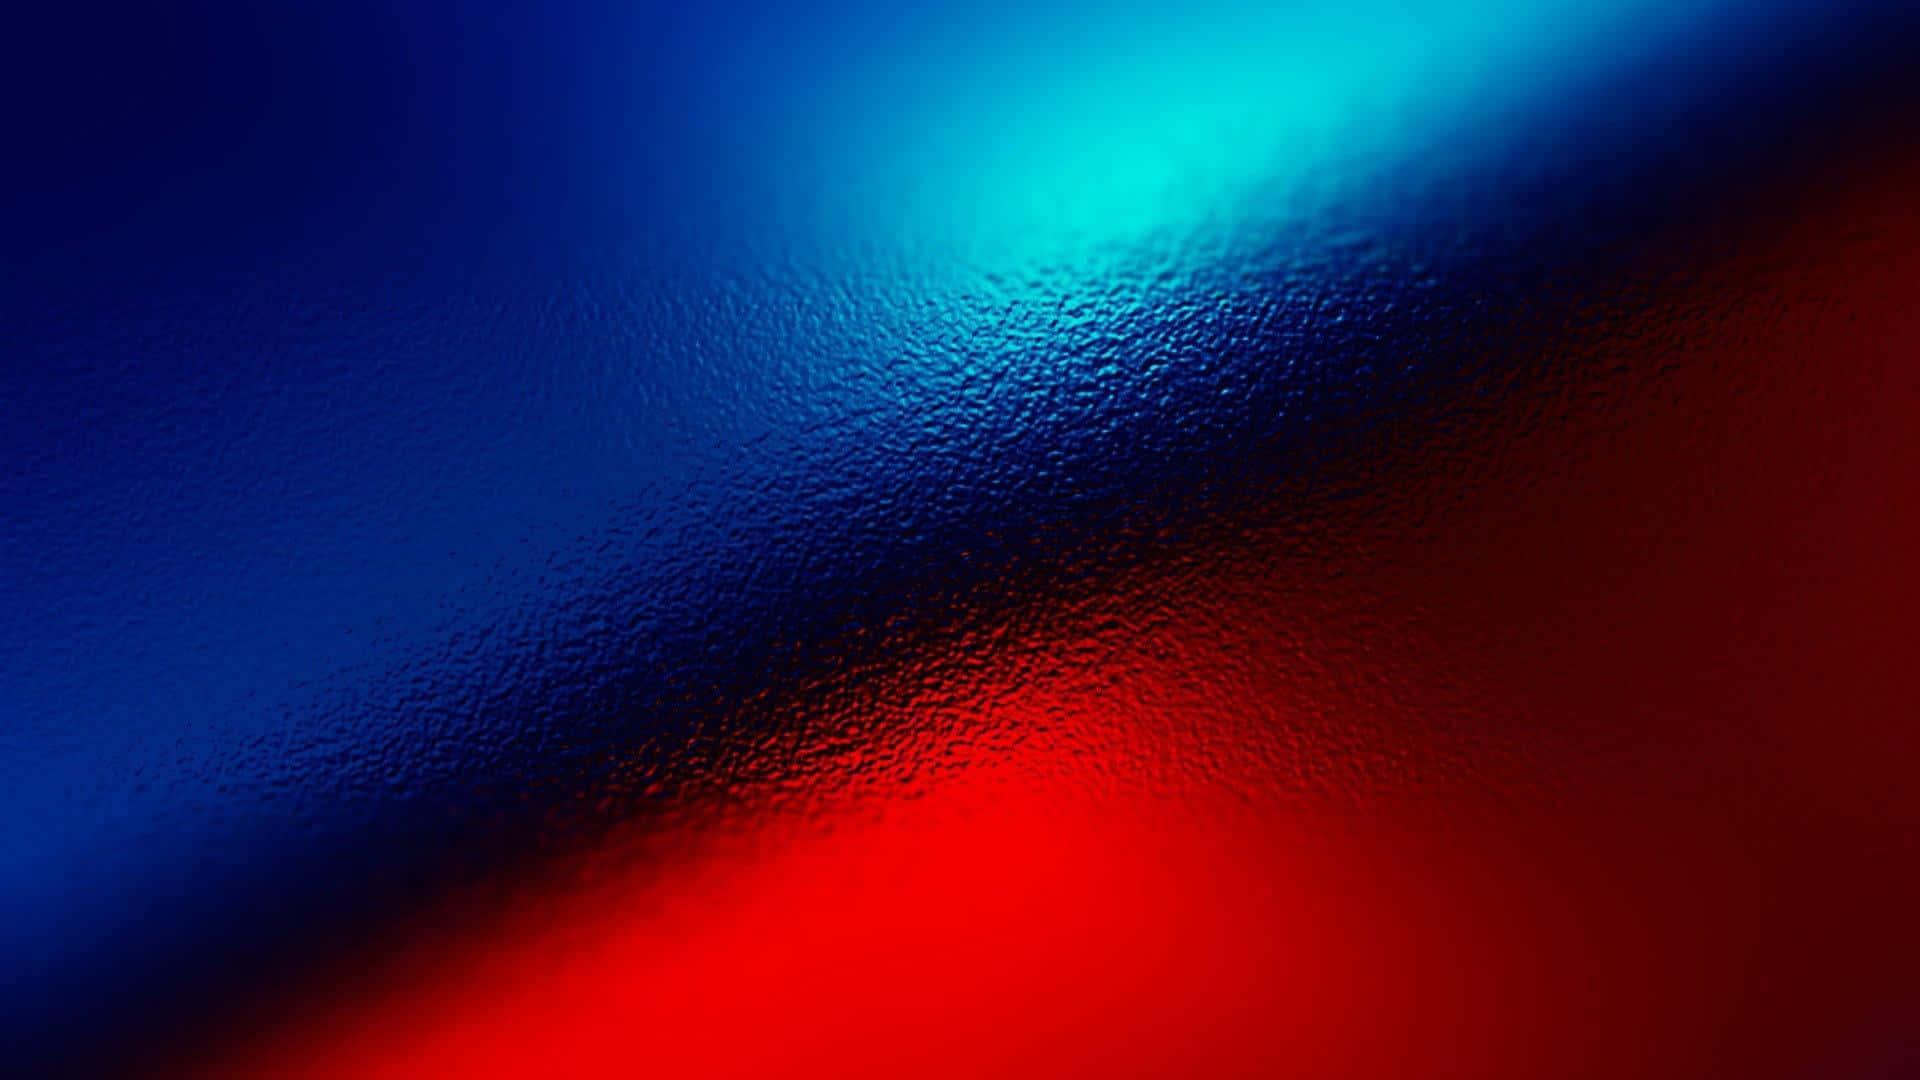 blue-and-red-background-1920-x-1080-28gbbs4ywv1ugqpg-3647.jpg